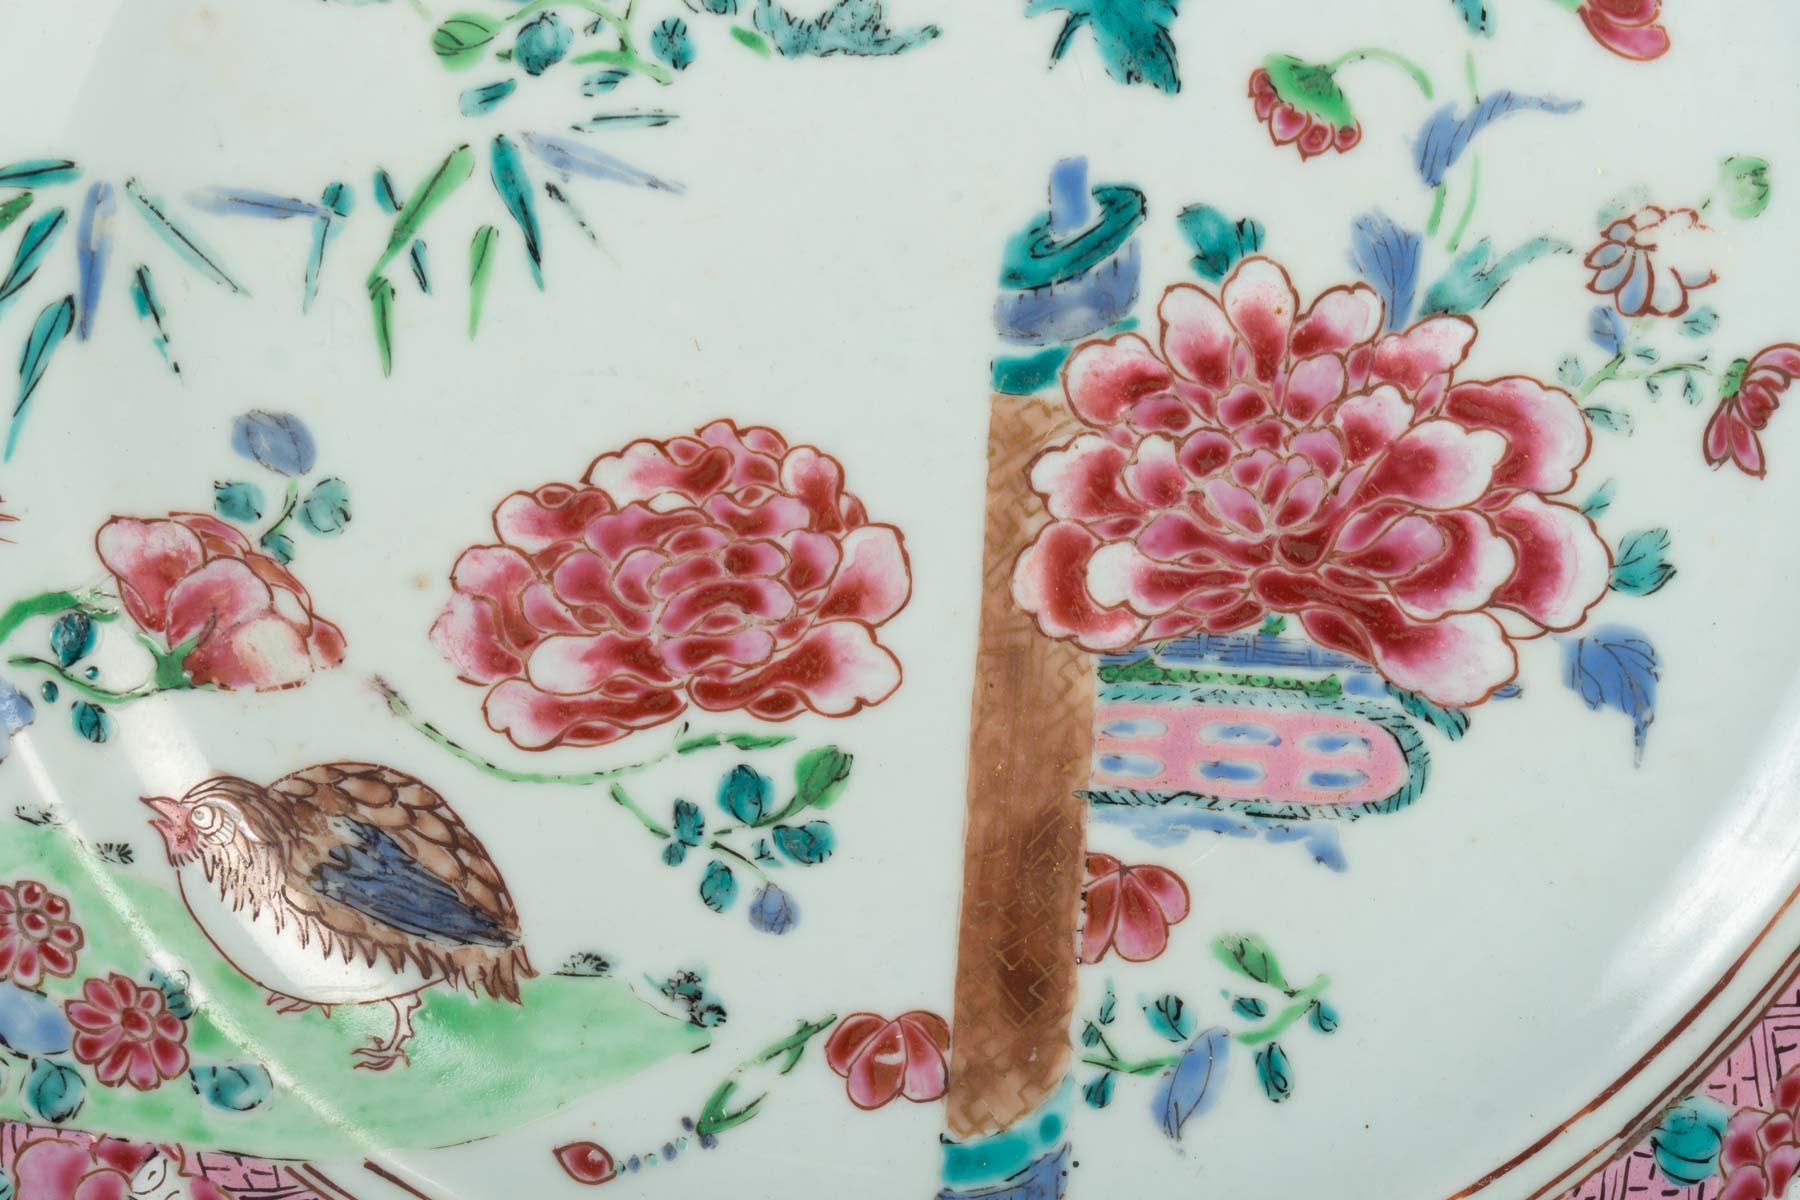 Dish in canton porcelain, 18th century.

Measures: D 31 cm., P 4.5 cm.